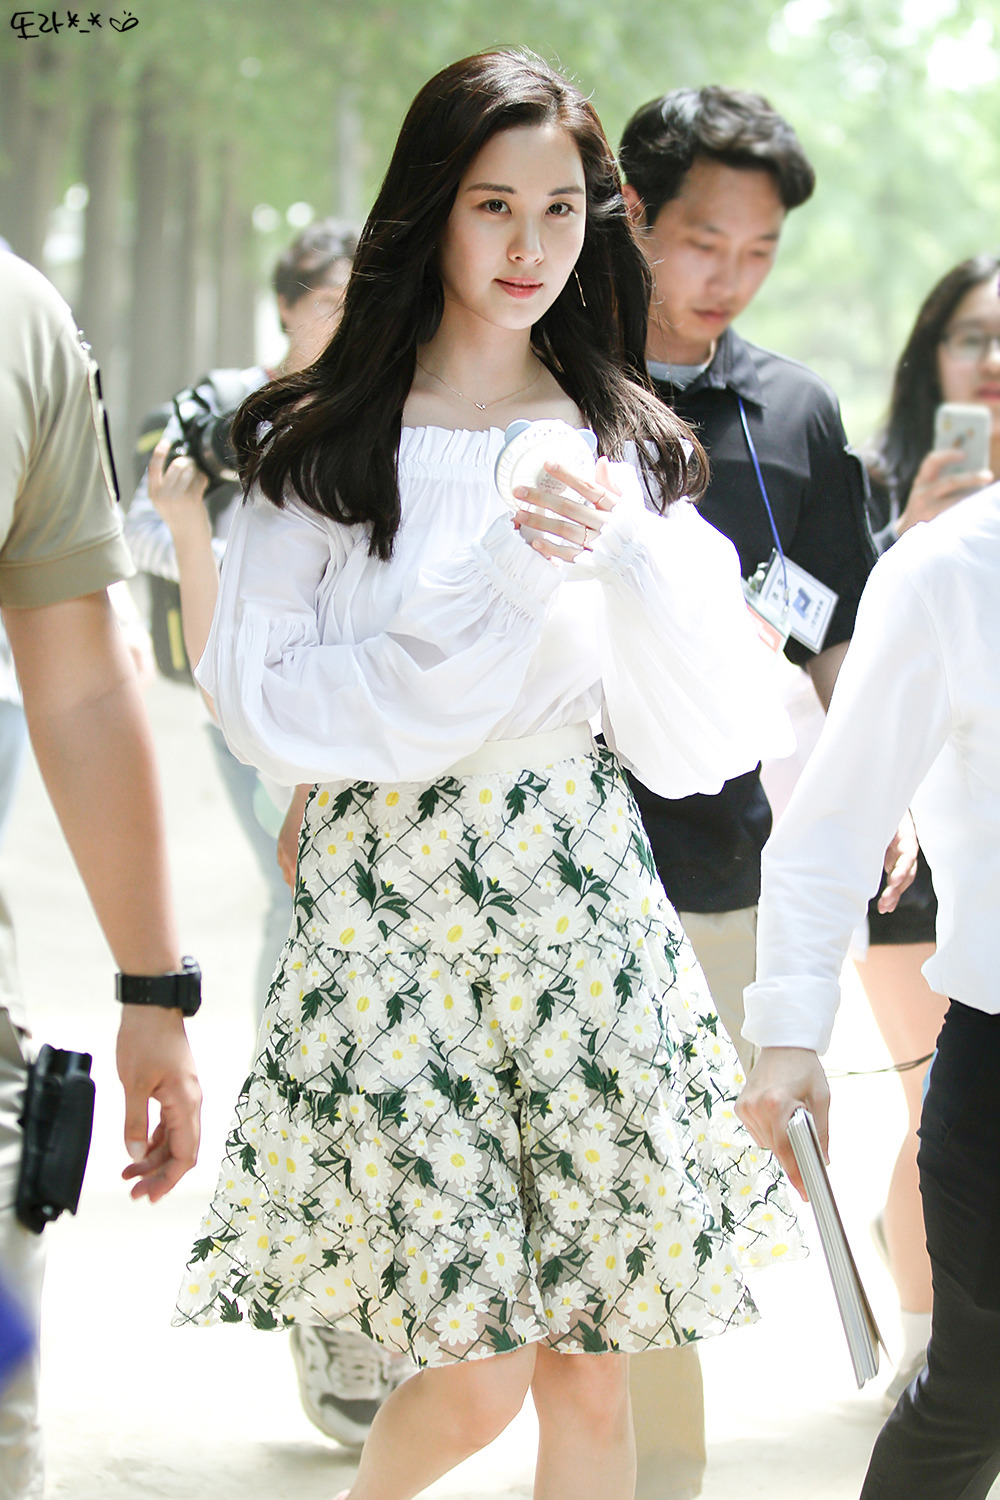  [PIC][03-06-2017]SeoHyun tham dự sự kiện “City Forestival - Maeil Duyou 'Confidence Diary'” vào chiều nay - Page 3 25314C505937A616310FFB